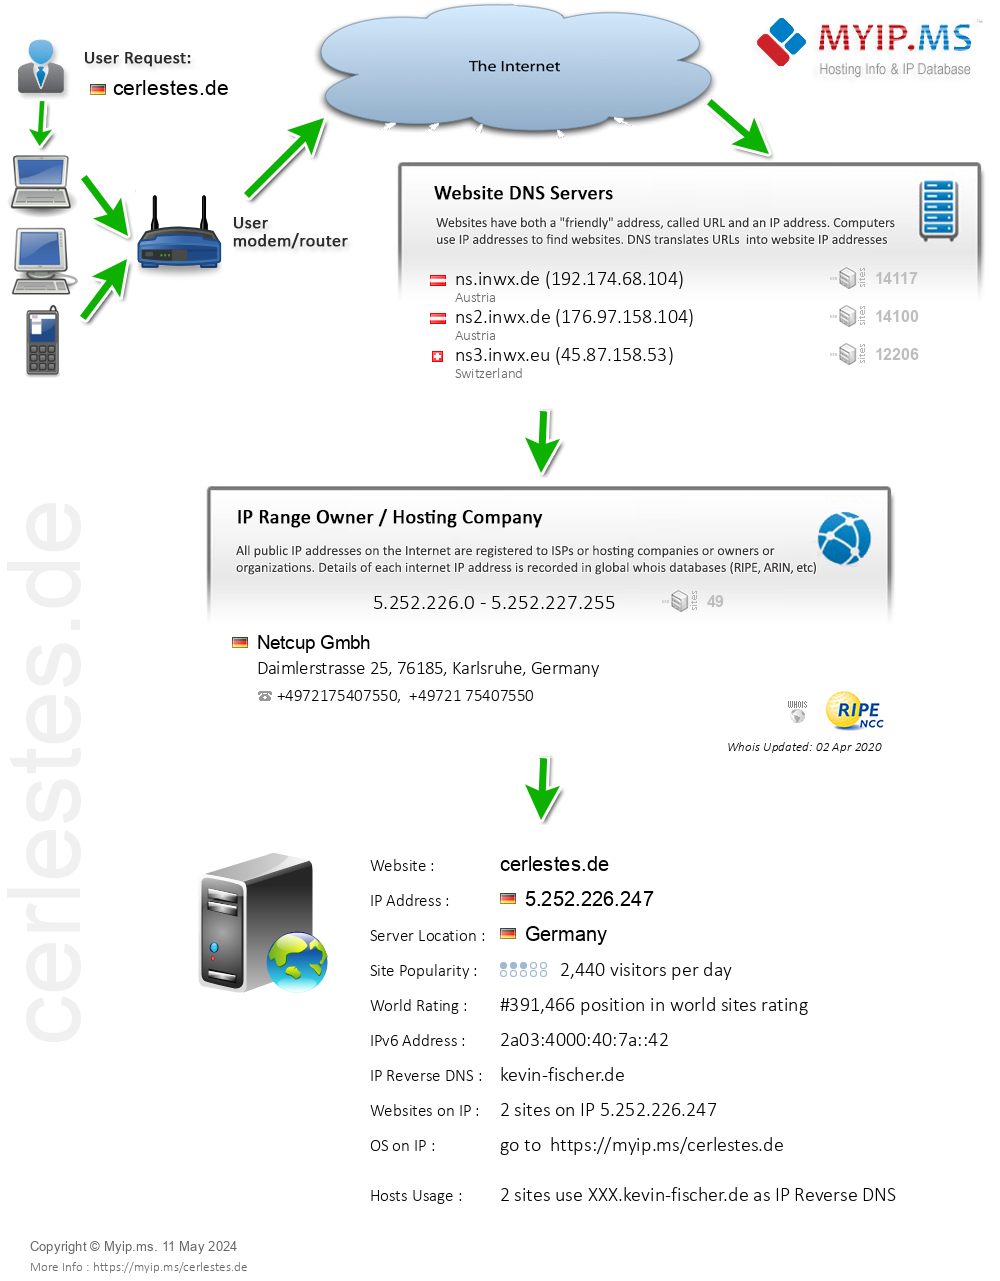 Cerlestes.de - Website Hosting Visual IP Diagram